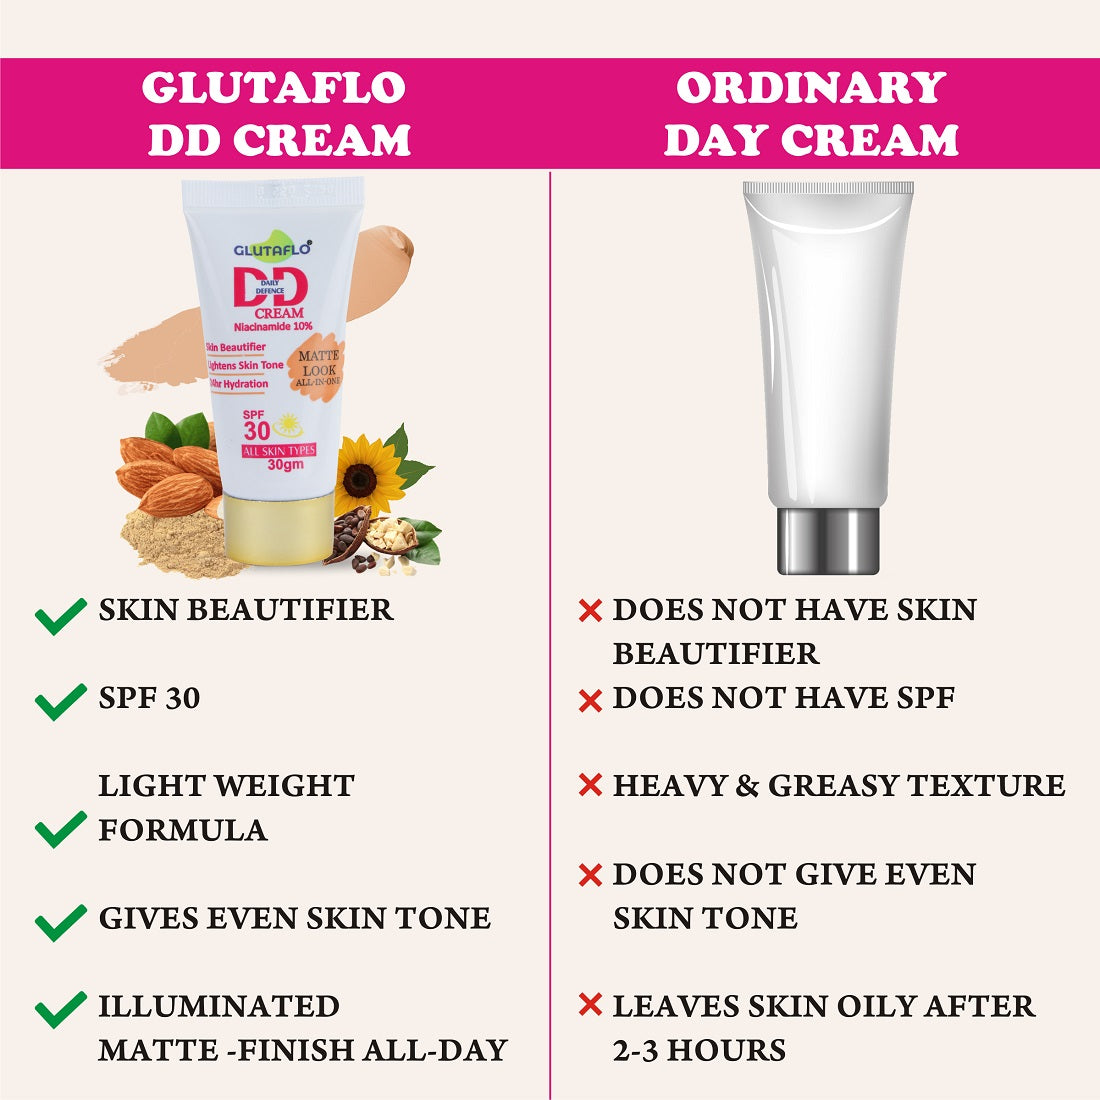 Glutaflo DD Cream, Light Evens Skin Tone, Multi-Function Daily Defense Cream, SPF 30 UV Protection, With Niacinamide 10%, All Skin Type, 30 gm